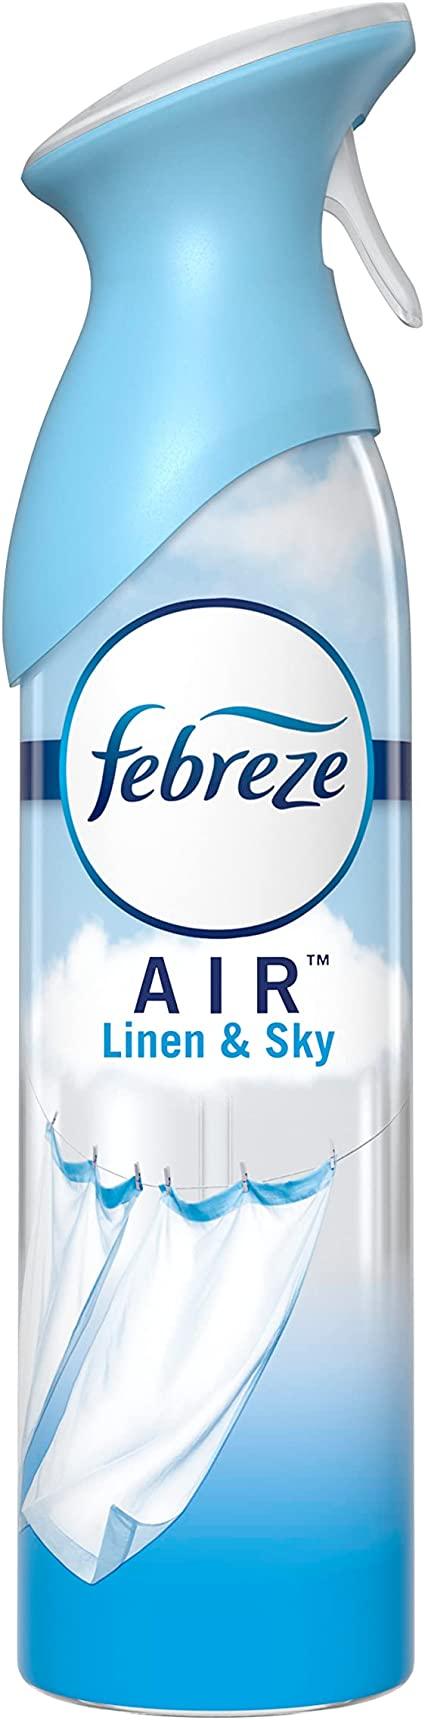 Febreze Air Freshner - Linen & Sky (250g) - Quecan